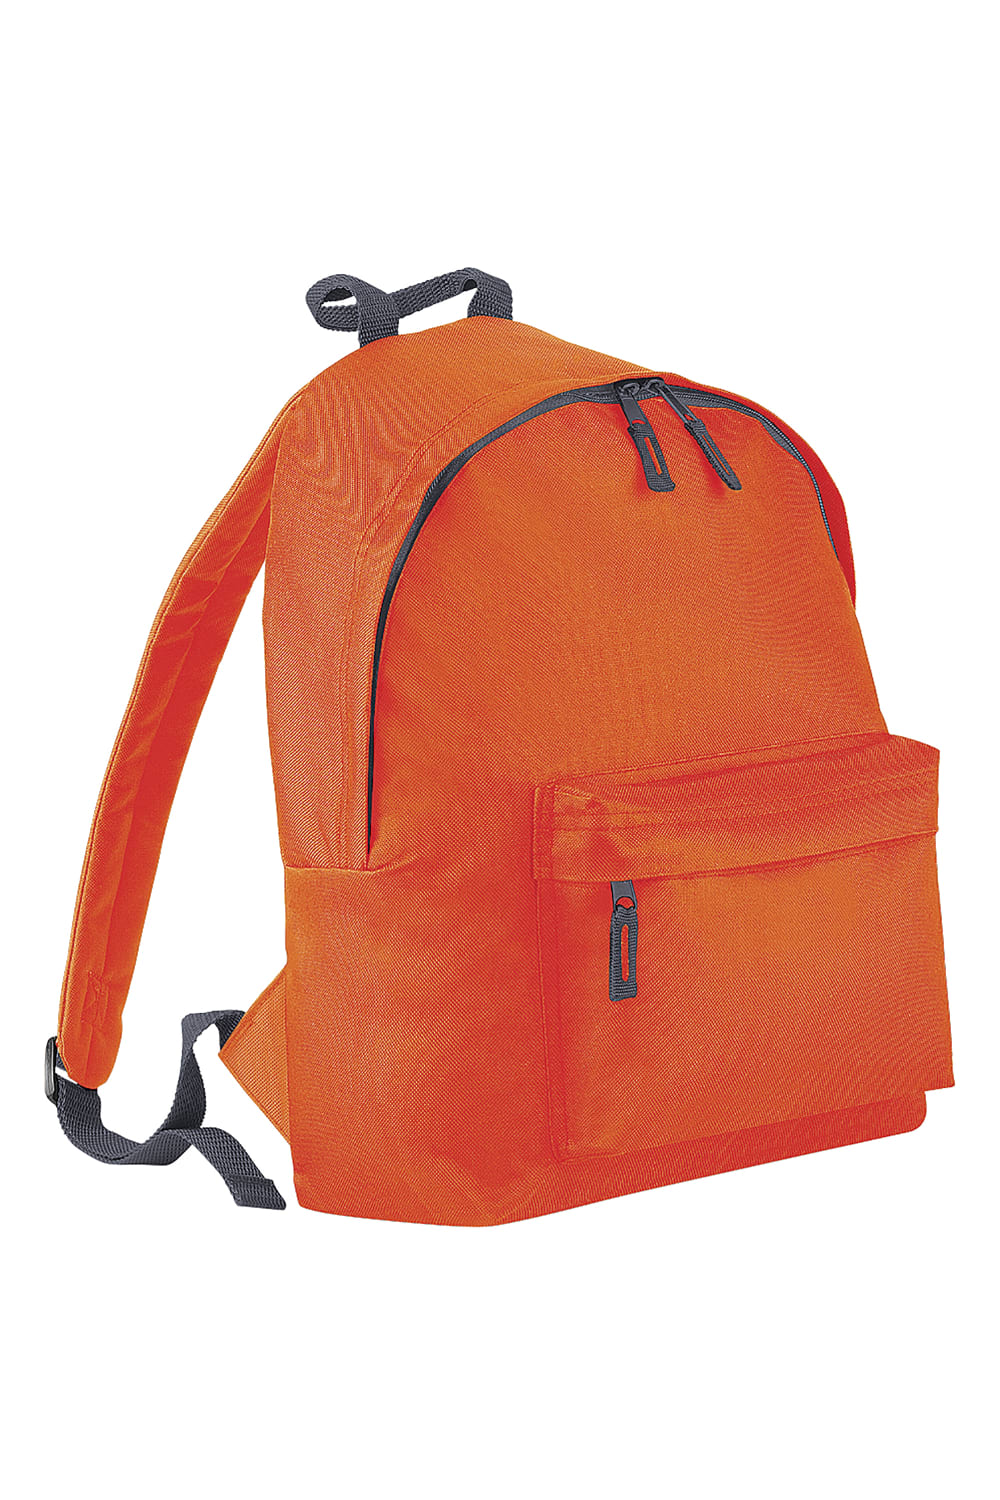 Fashion Backpack / Rucksack Pack of 2 (18 Liters) - Orange/Graphite Gray